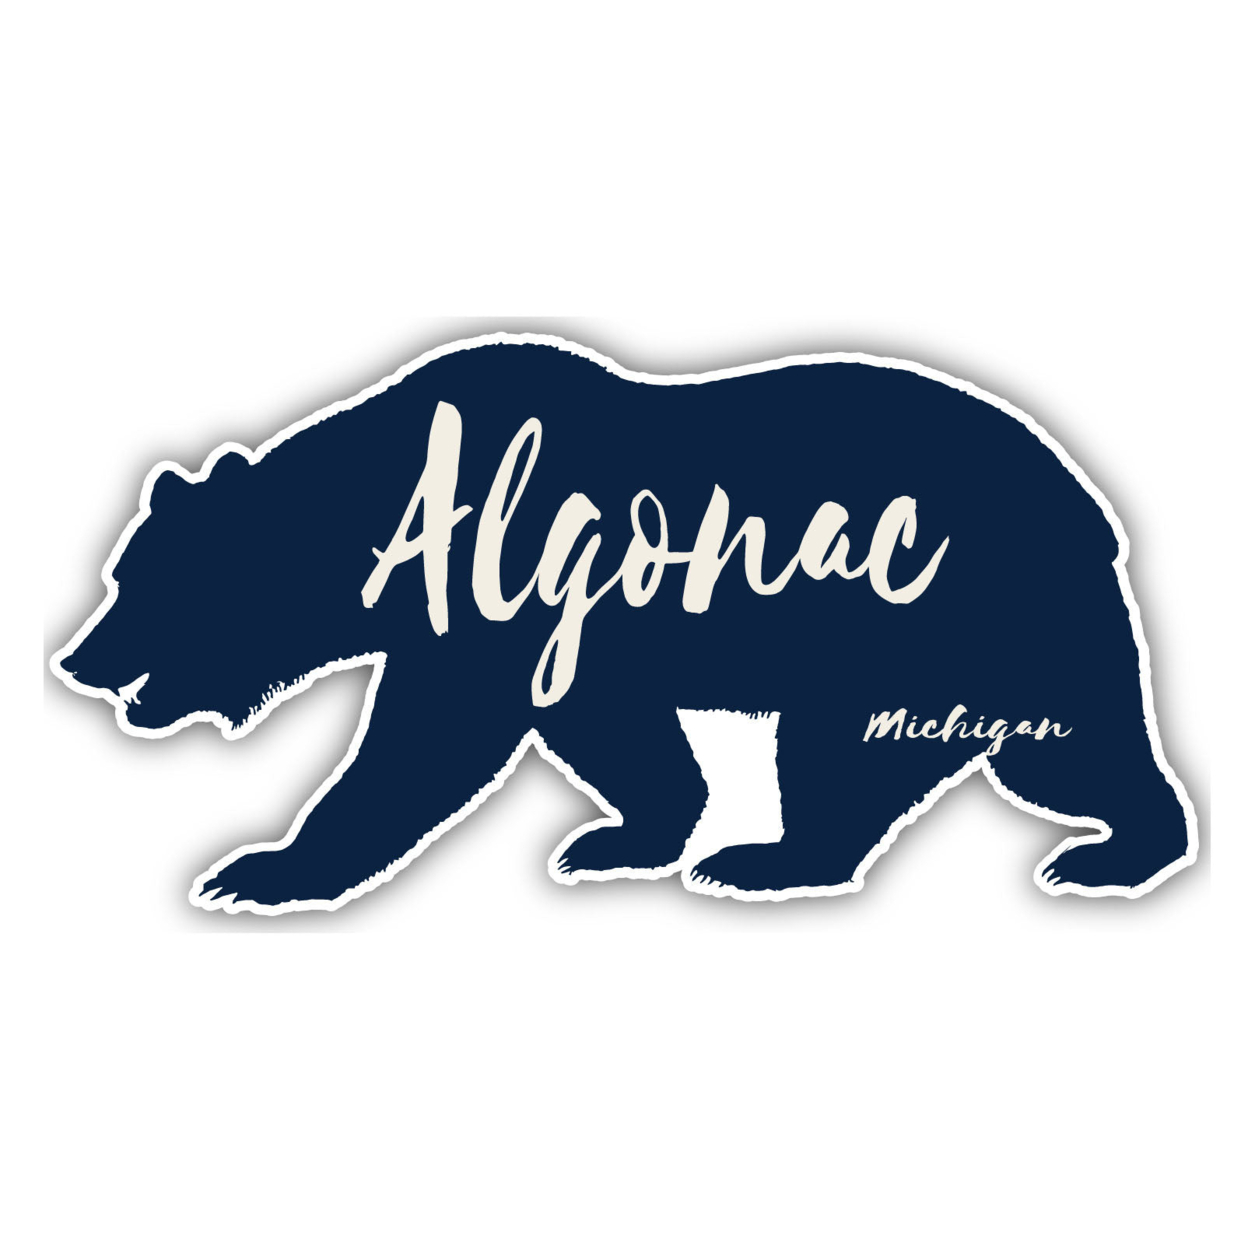 Algonac Michigan Souvenir Decorative Stickers (Choose Theme And Size) - Single Unit, 8-Inch, Bear